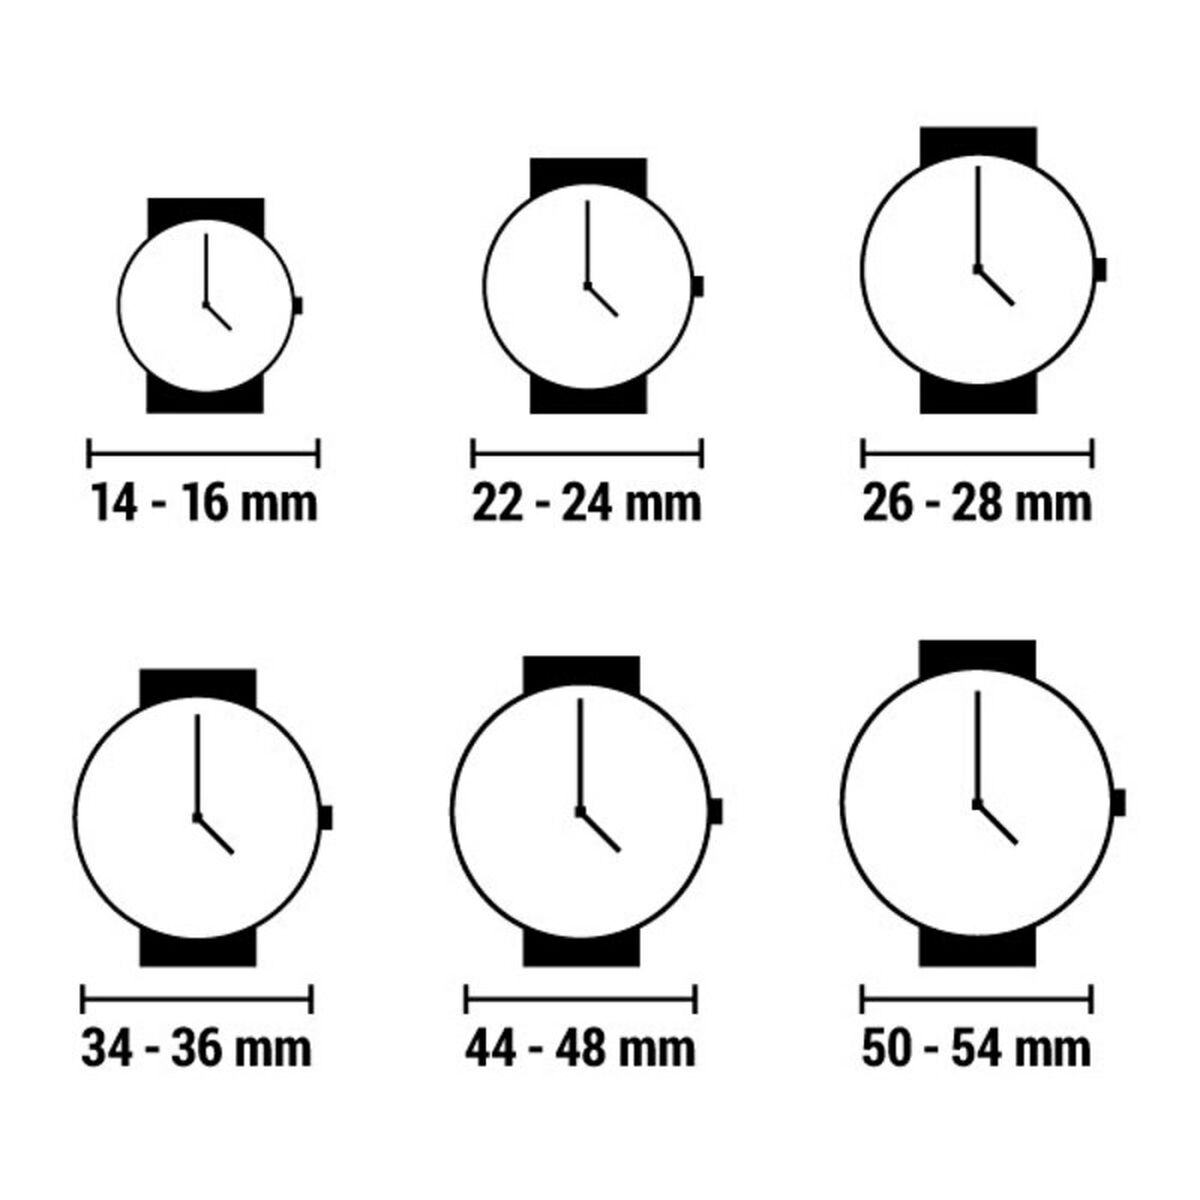 Horloge Dames Laura Biagiotti LB0007S-05Z (Ø 15 mm)